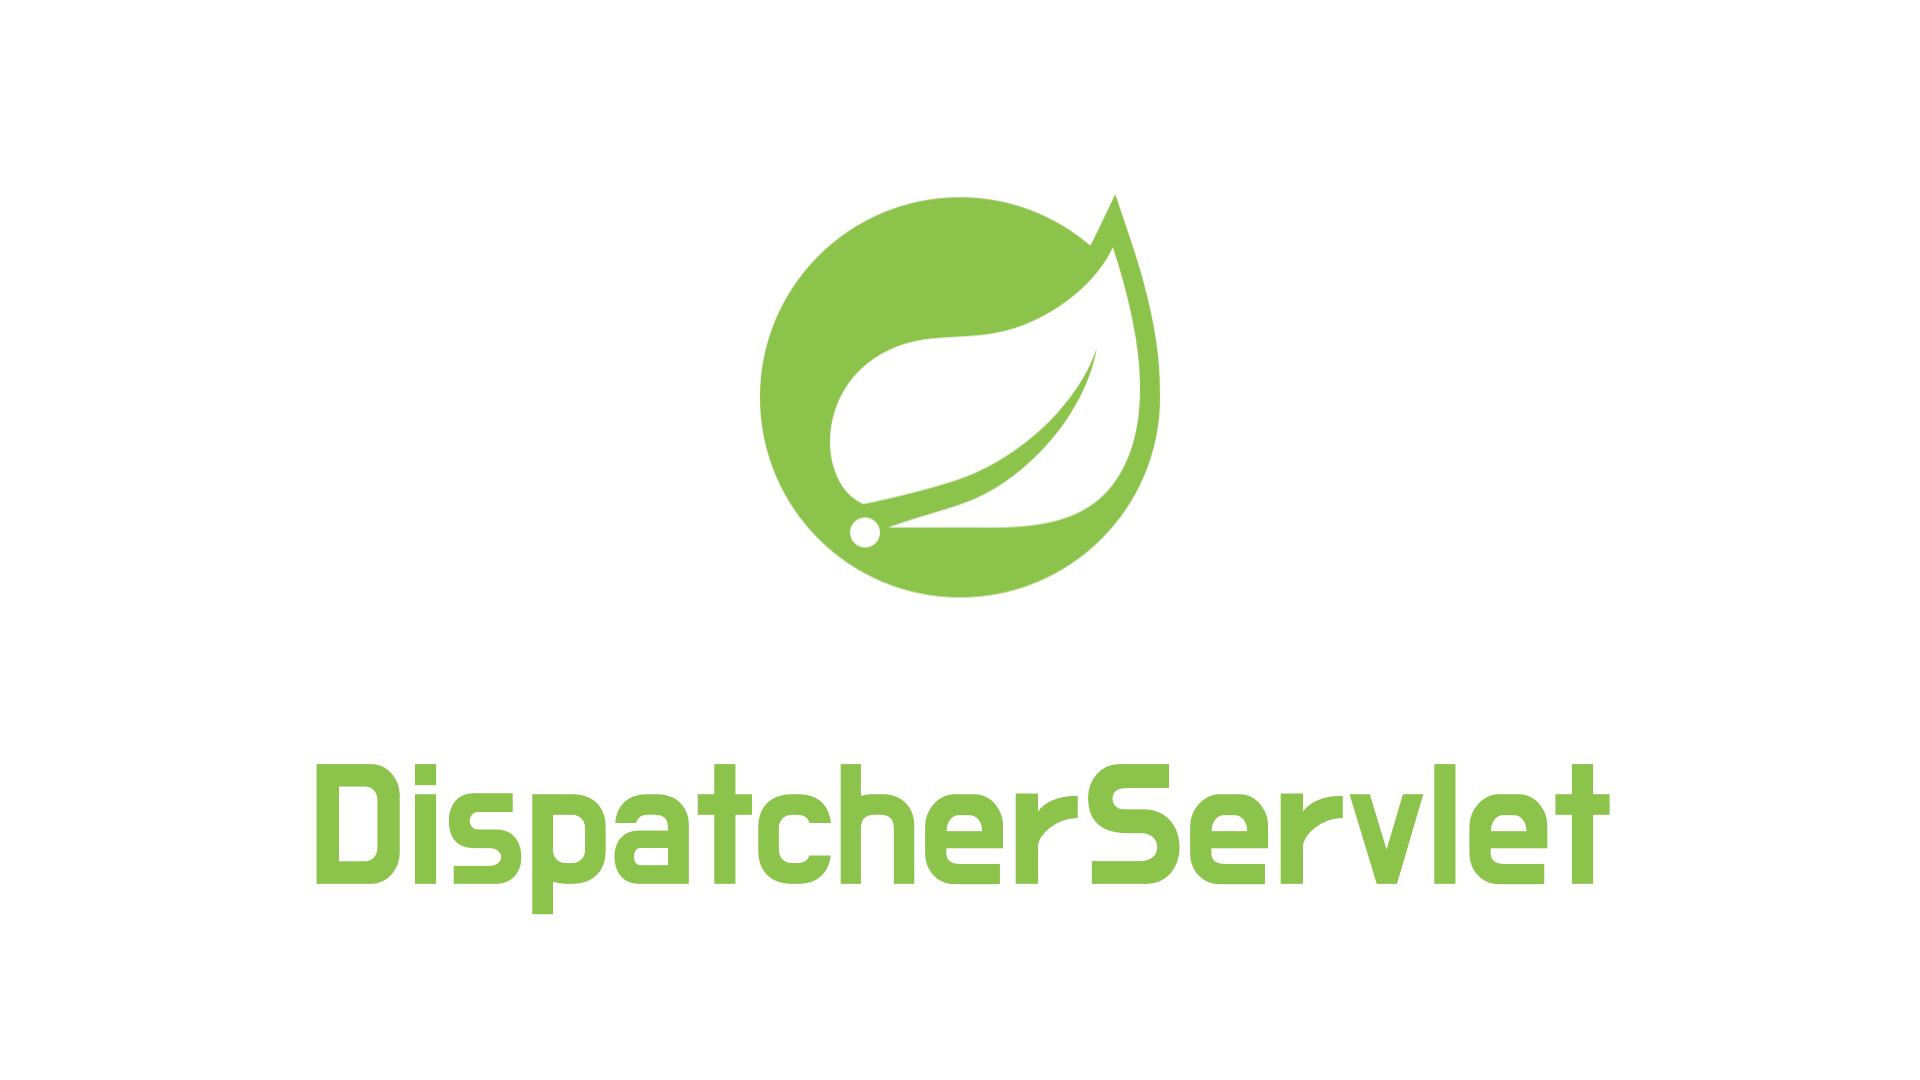 DispatcherServlet - Part 2